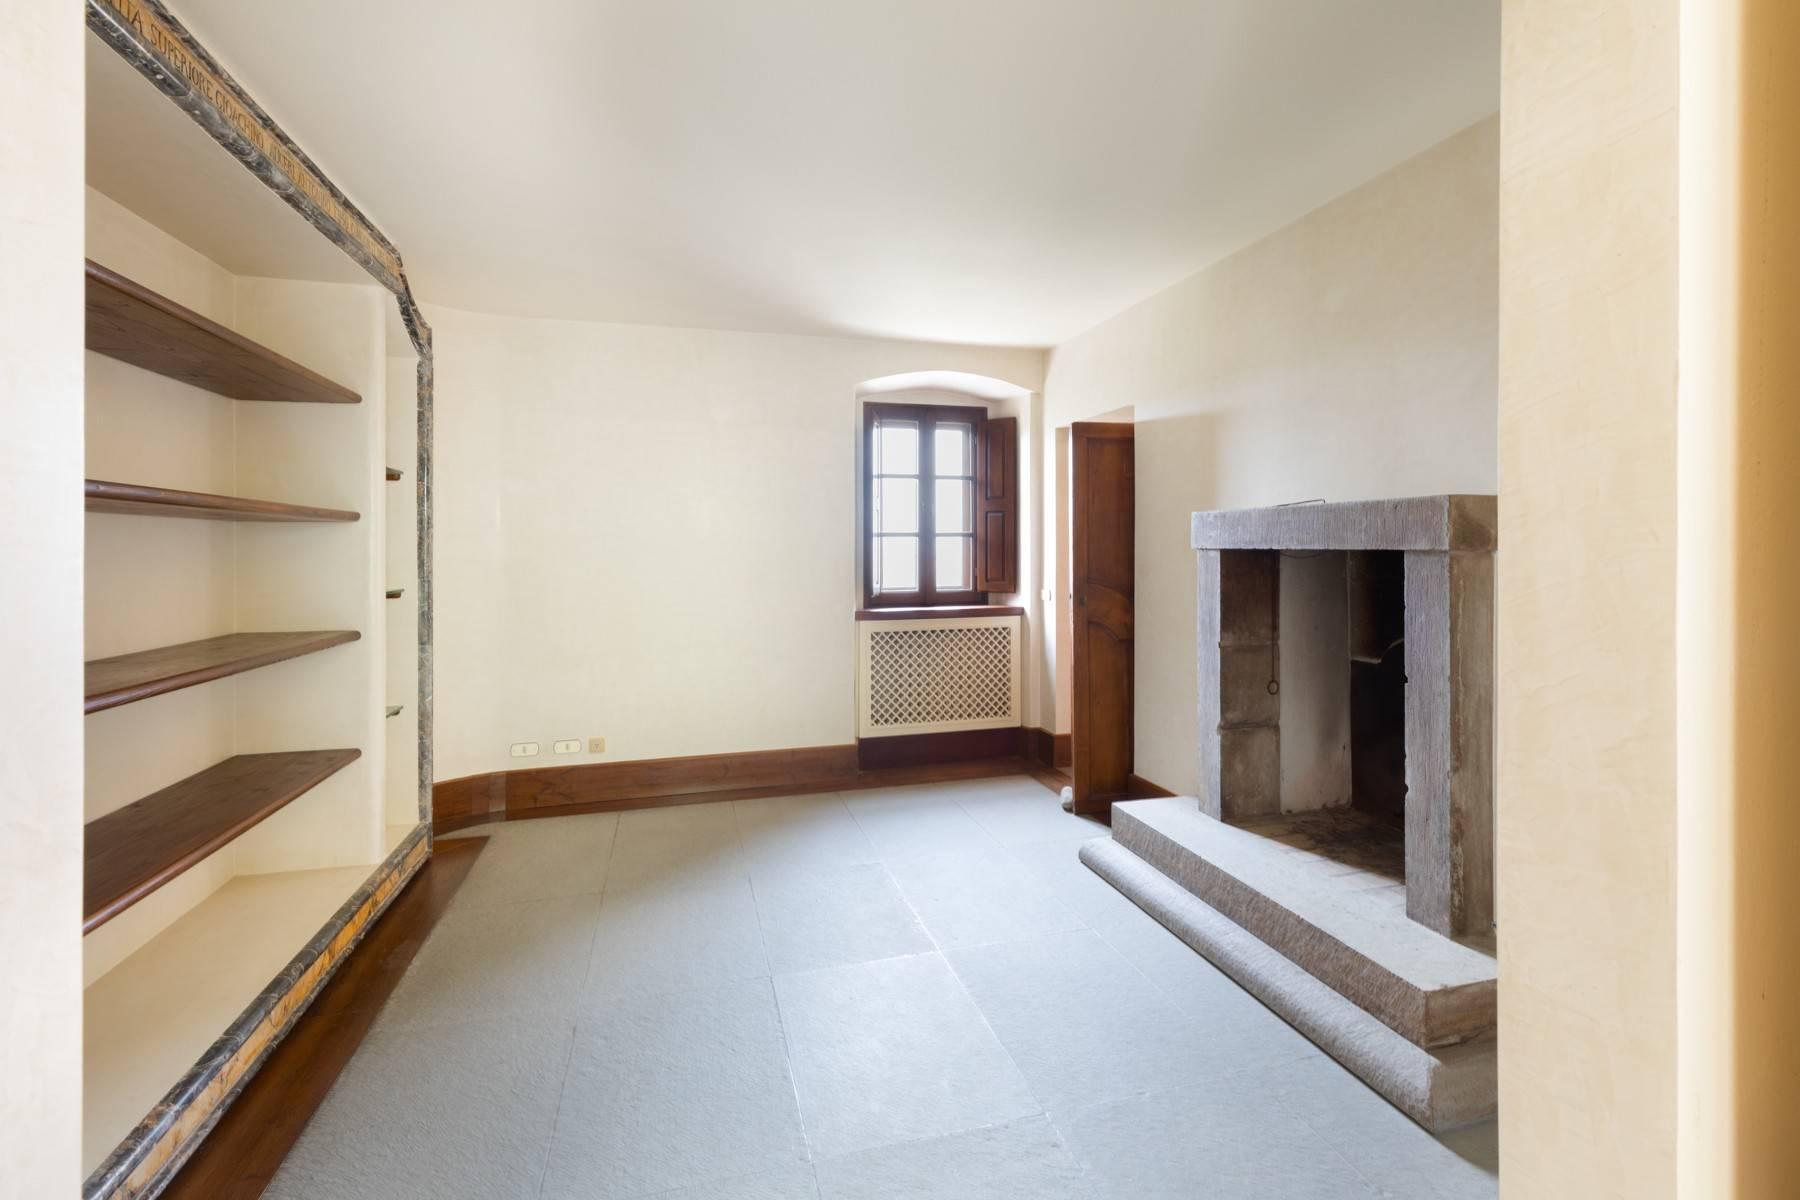 Historical villa dating back to the XVII century overlooking Arezzo - 22